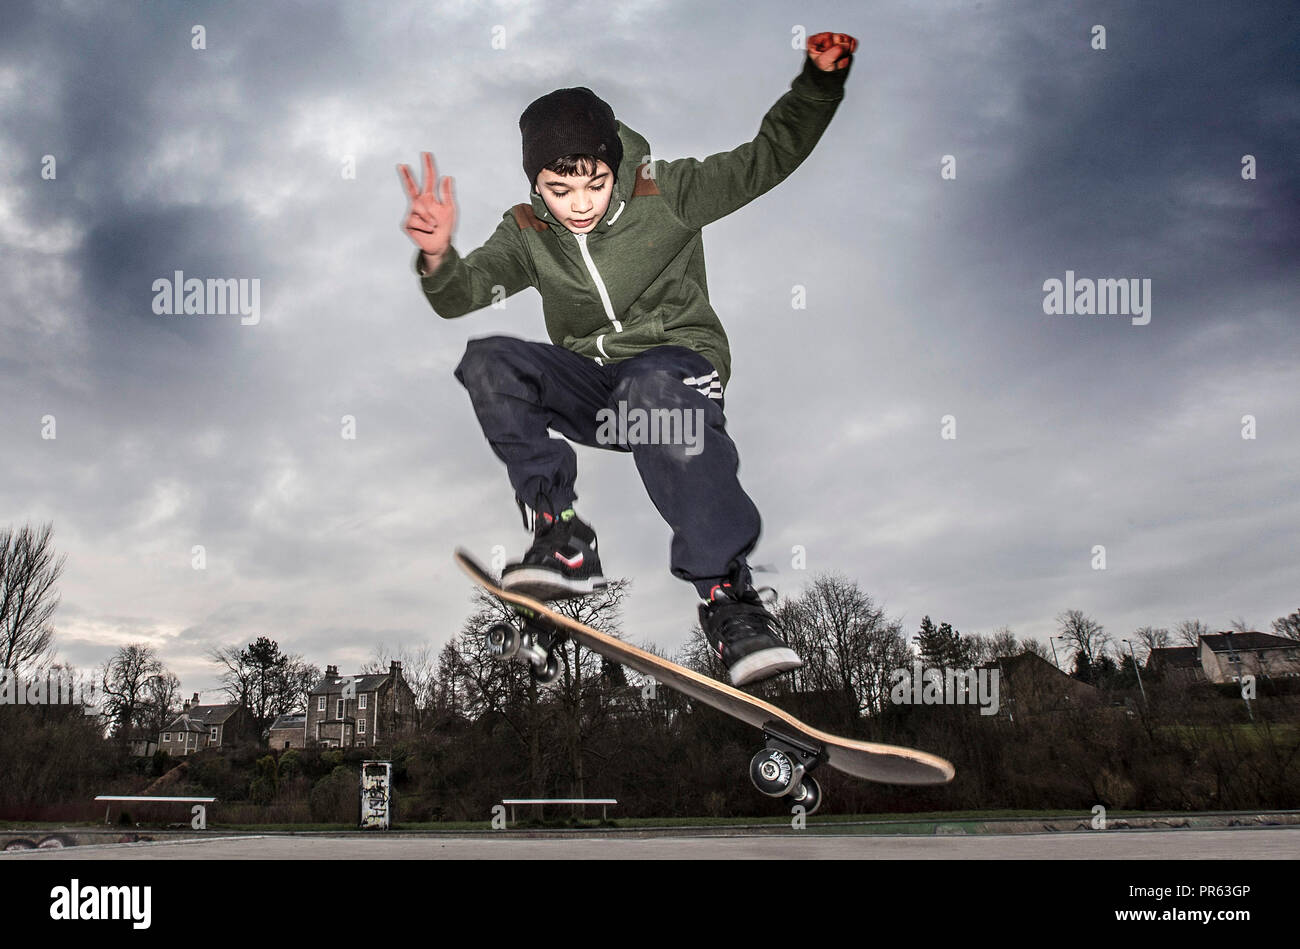 Young boy skateboarding Stock Photo